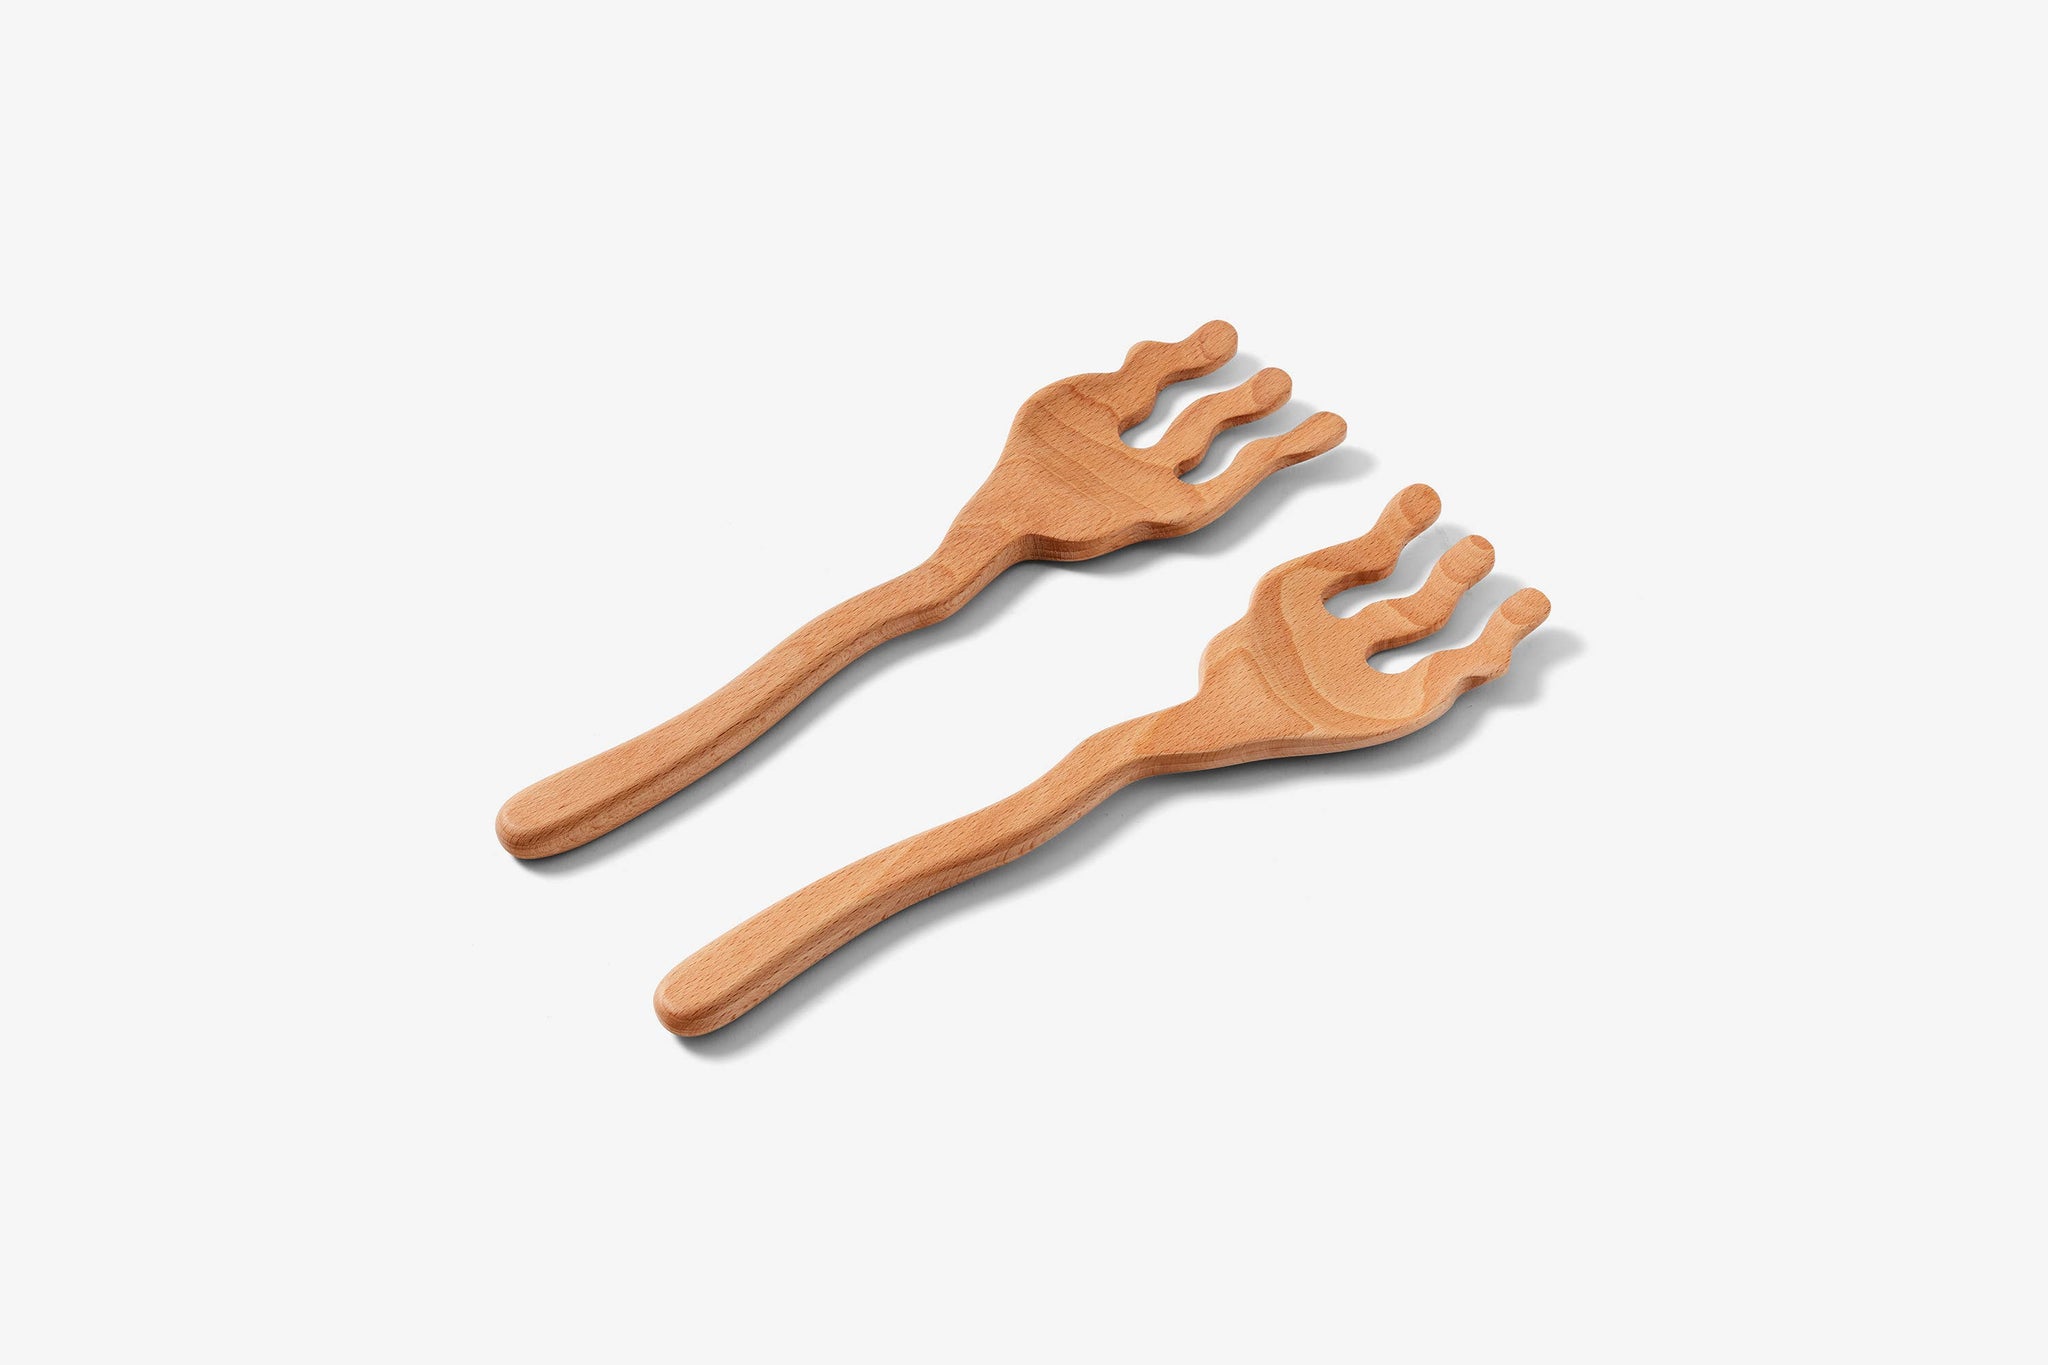 "Serving Friends" Wavy Wooden Spoons